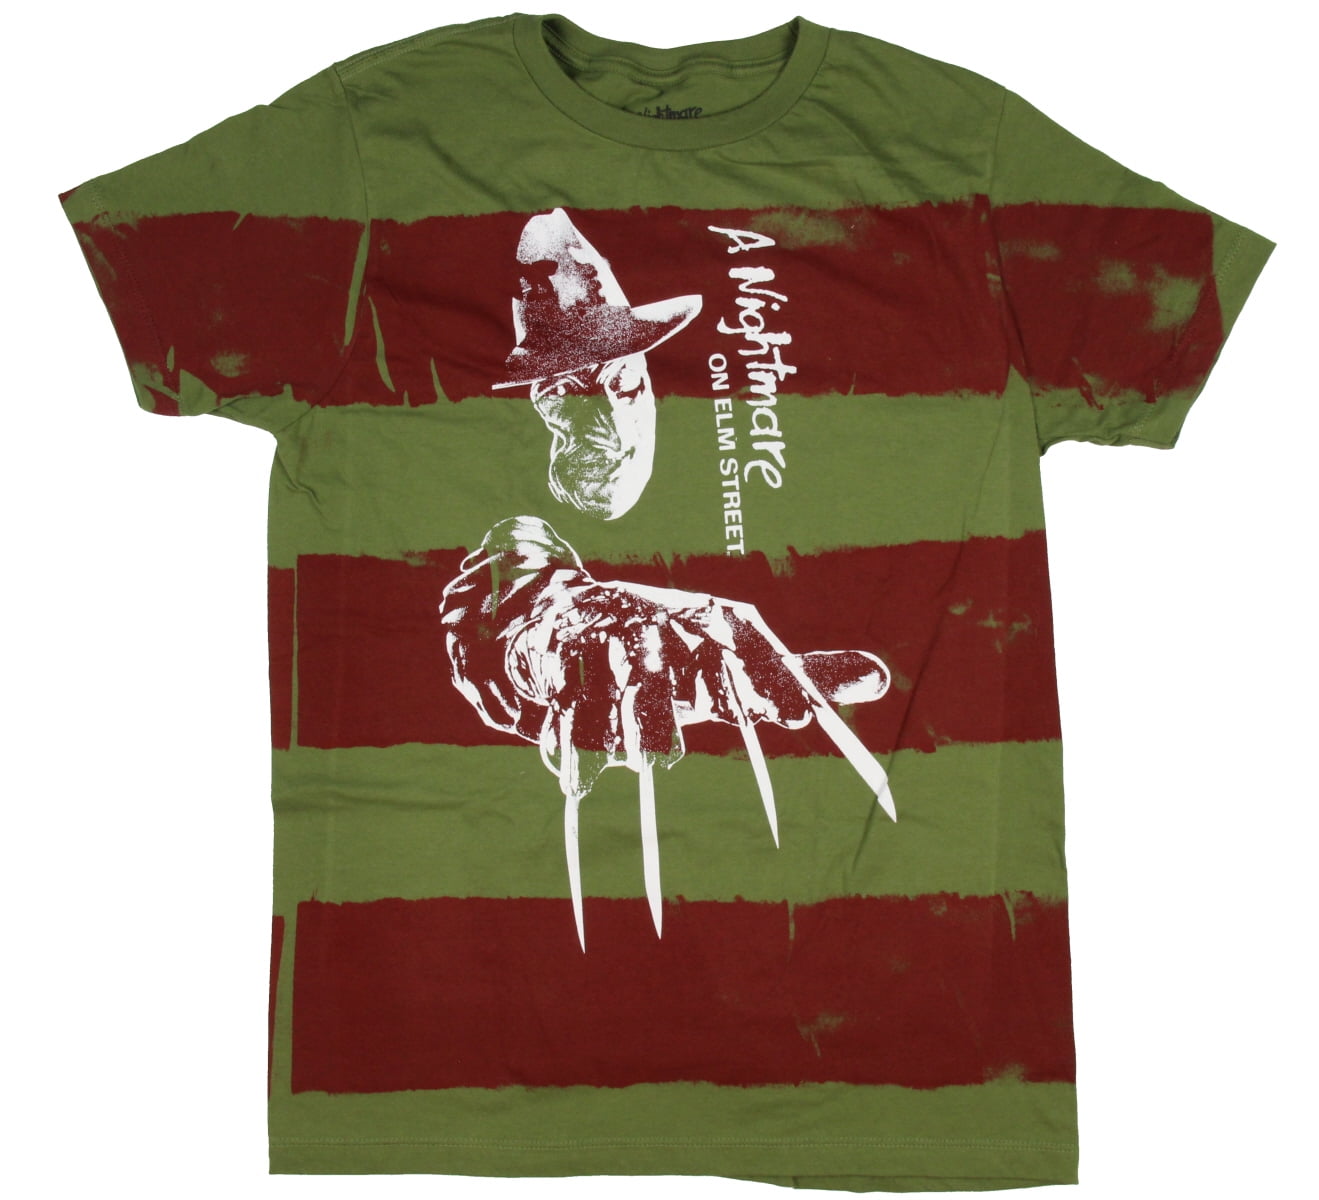 Nightmare On Elm Street Freddy Krueger Glove Unisex Adult T-Shirt Shirt Tee Jersey